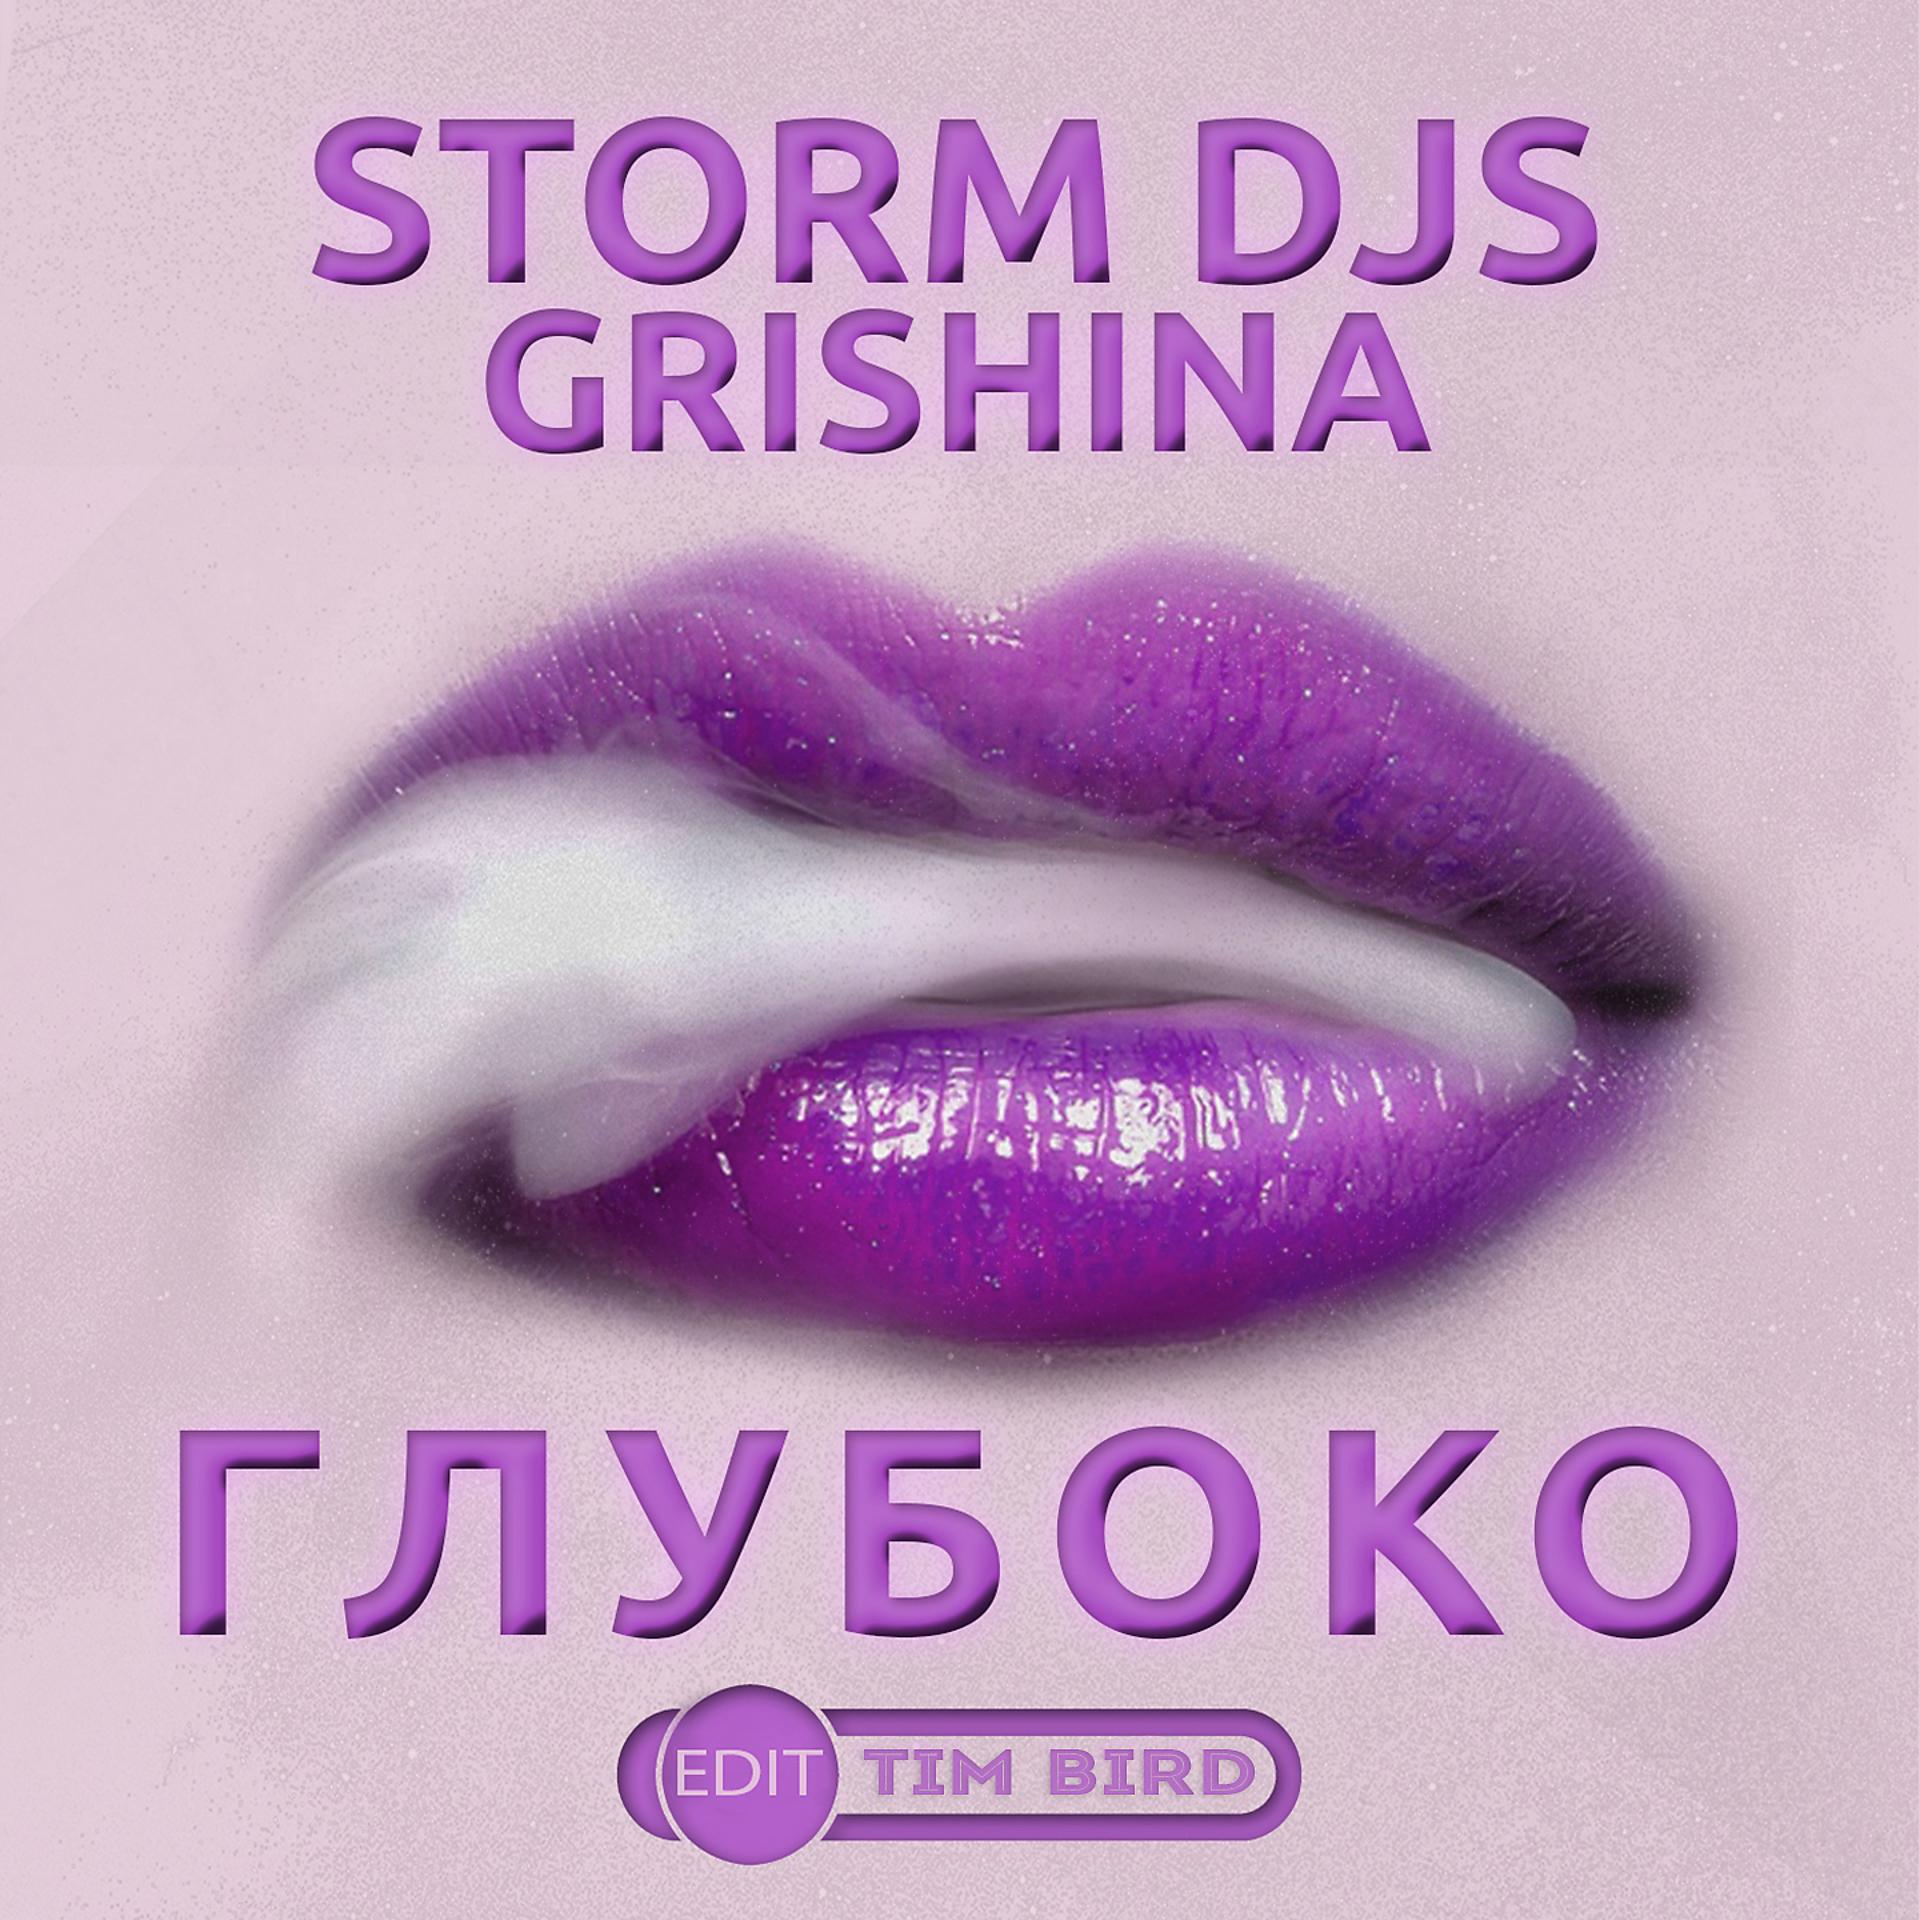 Bird remix. Storm DJS feat. Grishina. DJ Storm. Storm DJS feat Grishina на ощупь.